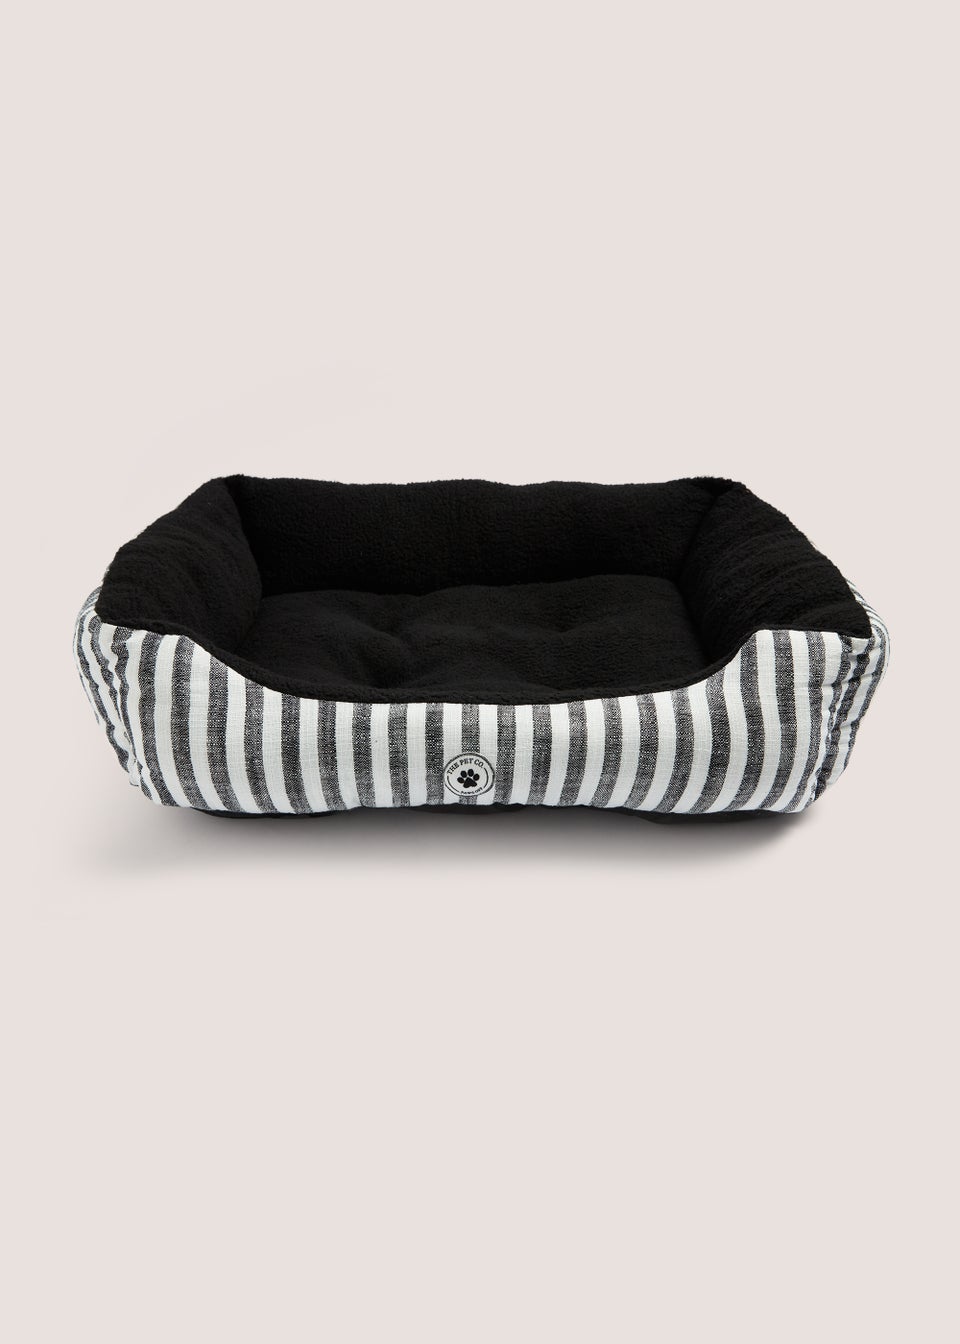 Monochrome Stripe Pet Bed (Medium-Large)